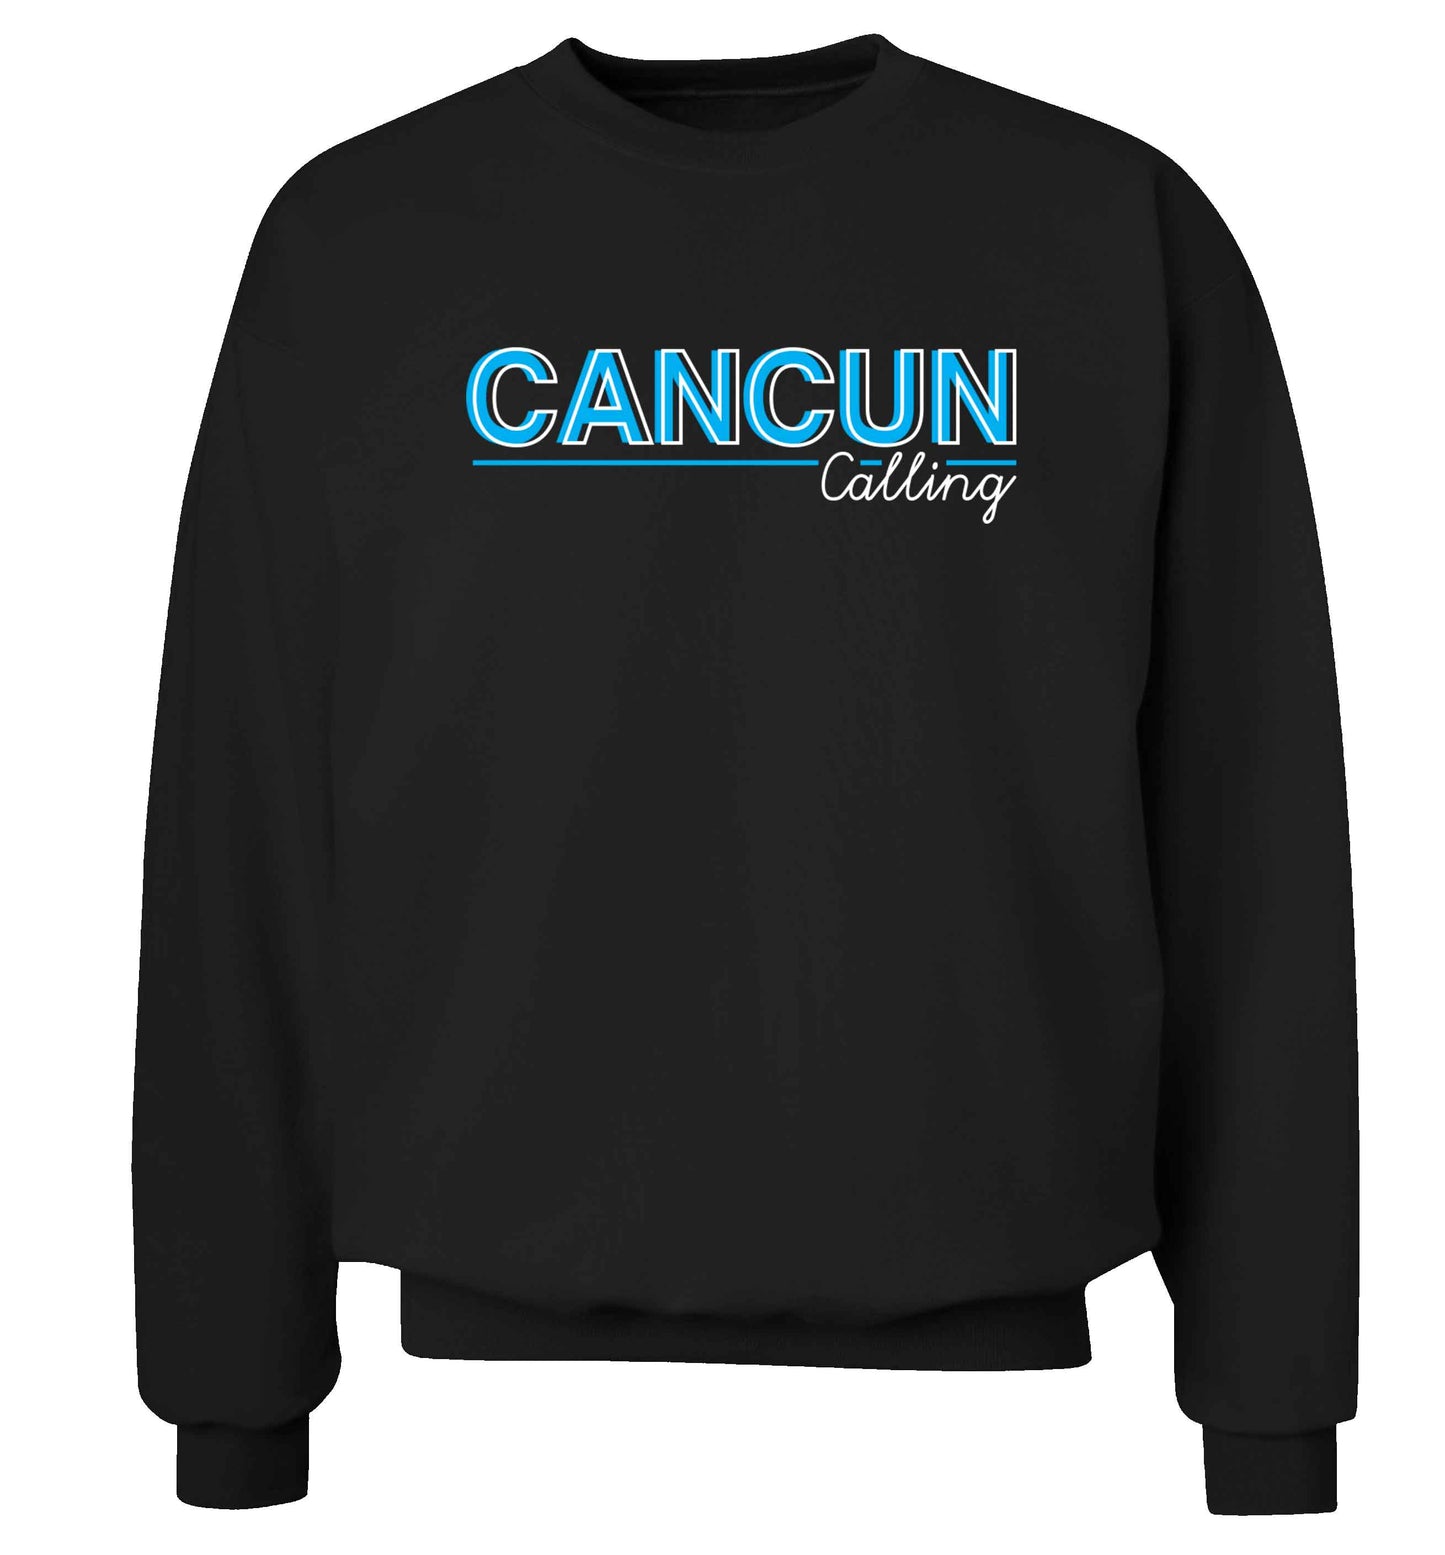 Cancun calling Adult's unisex black Sweater 2XL